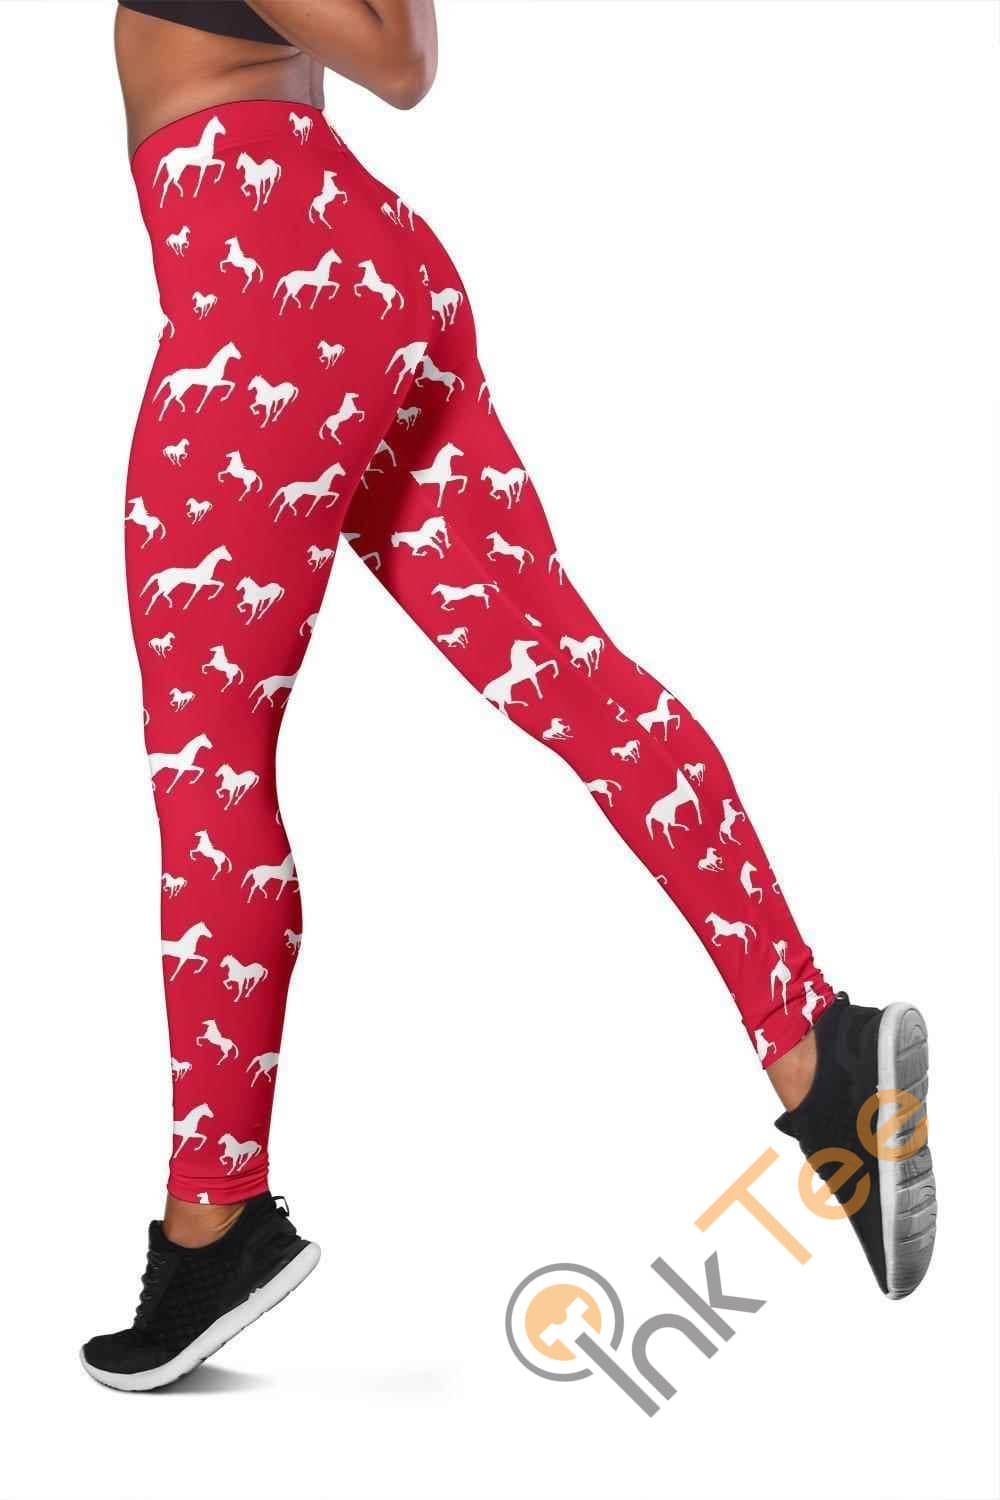 Inktee Store - Red Horse 3D All Over Print For Yoga Fitness Women'S Leggings Image